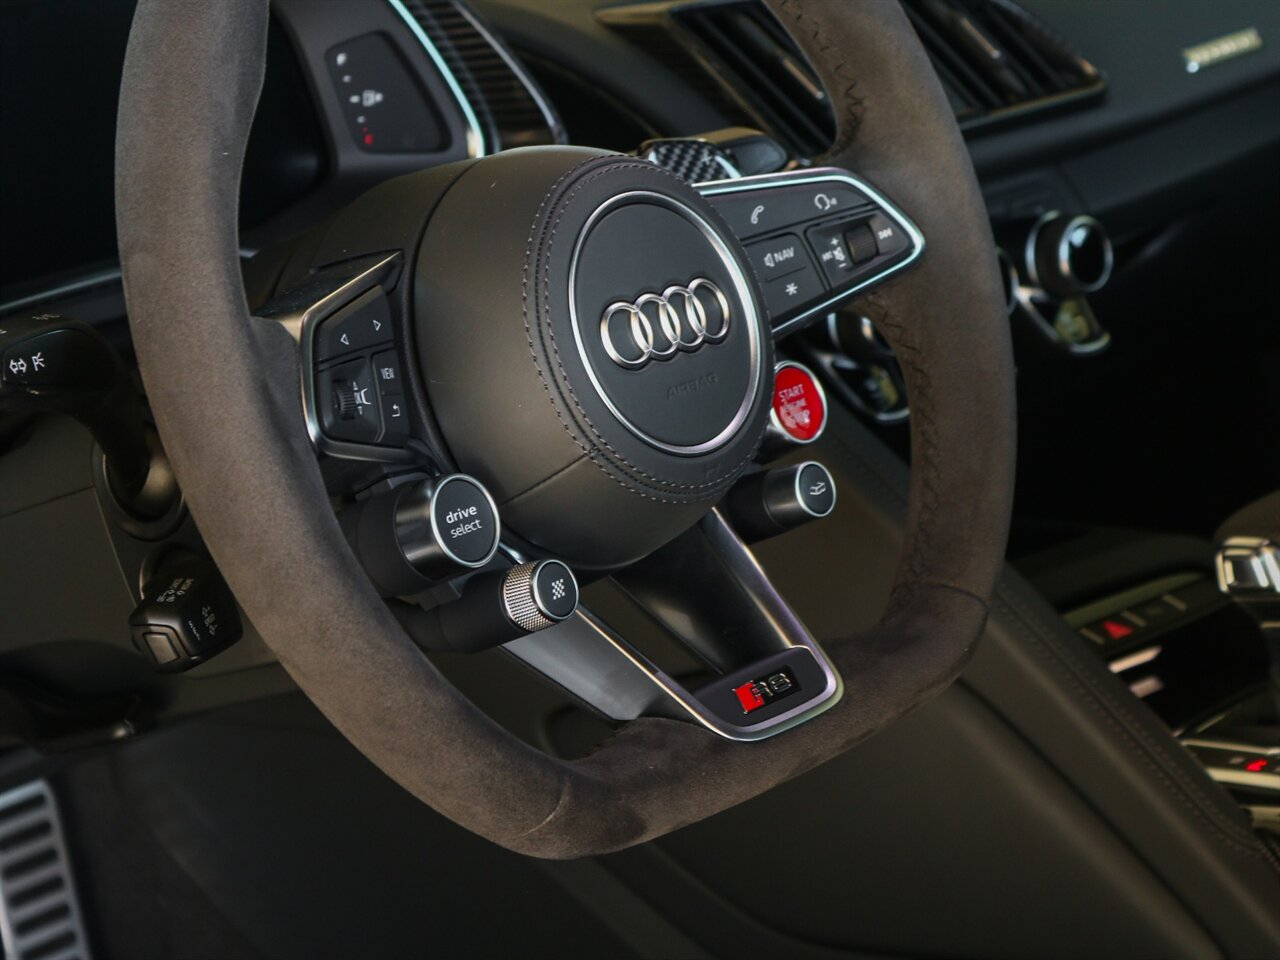 2018 Audi R8 5.2 quattro V10 Plus  Performance Edition, 1 of 10 for USA - Photo 37 - Springfield, MO 65802